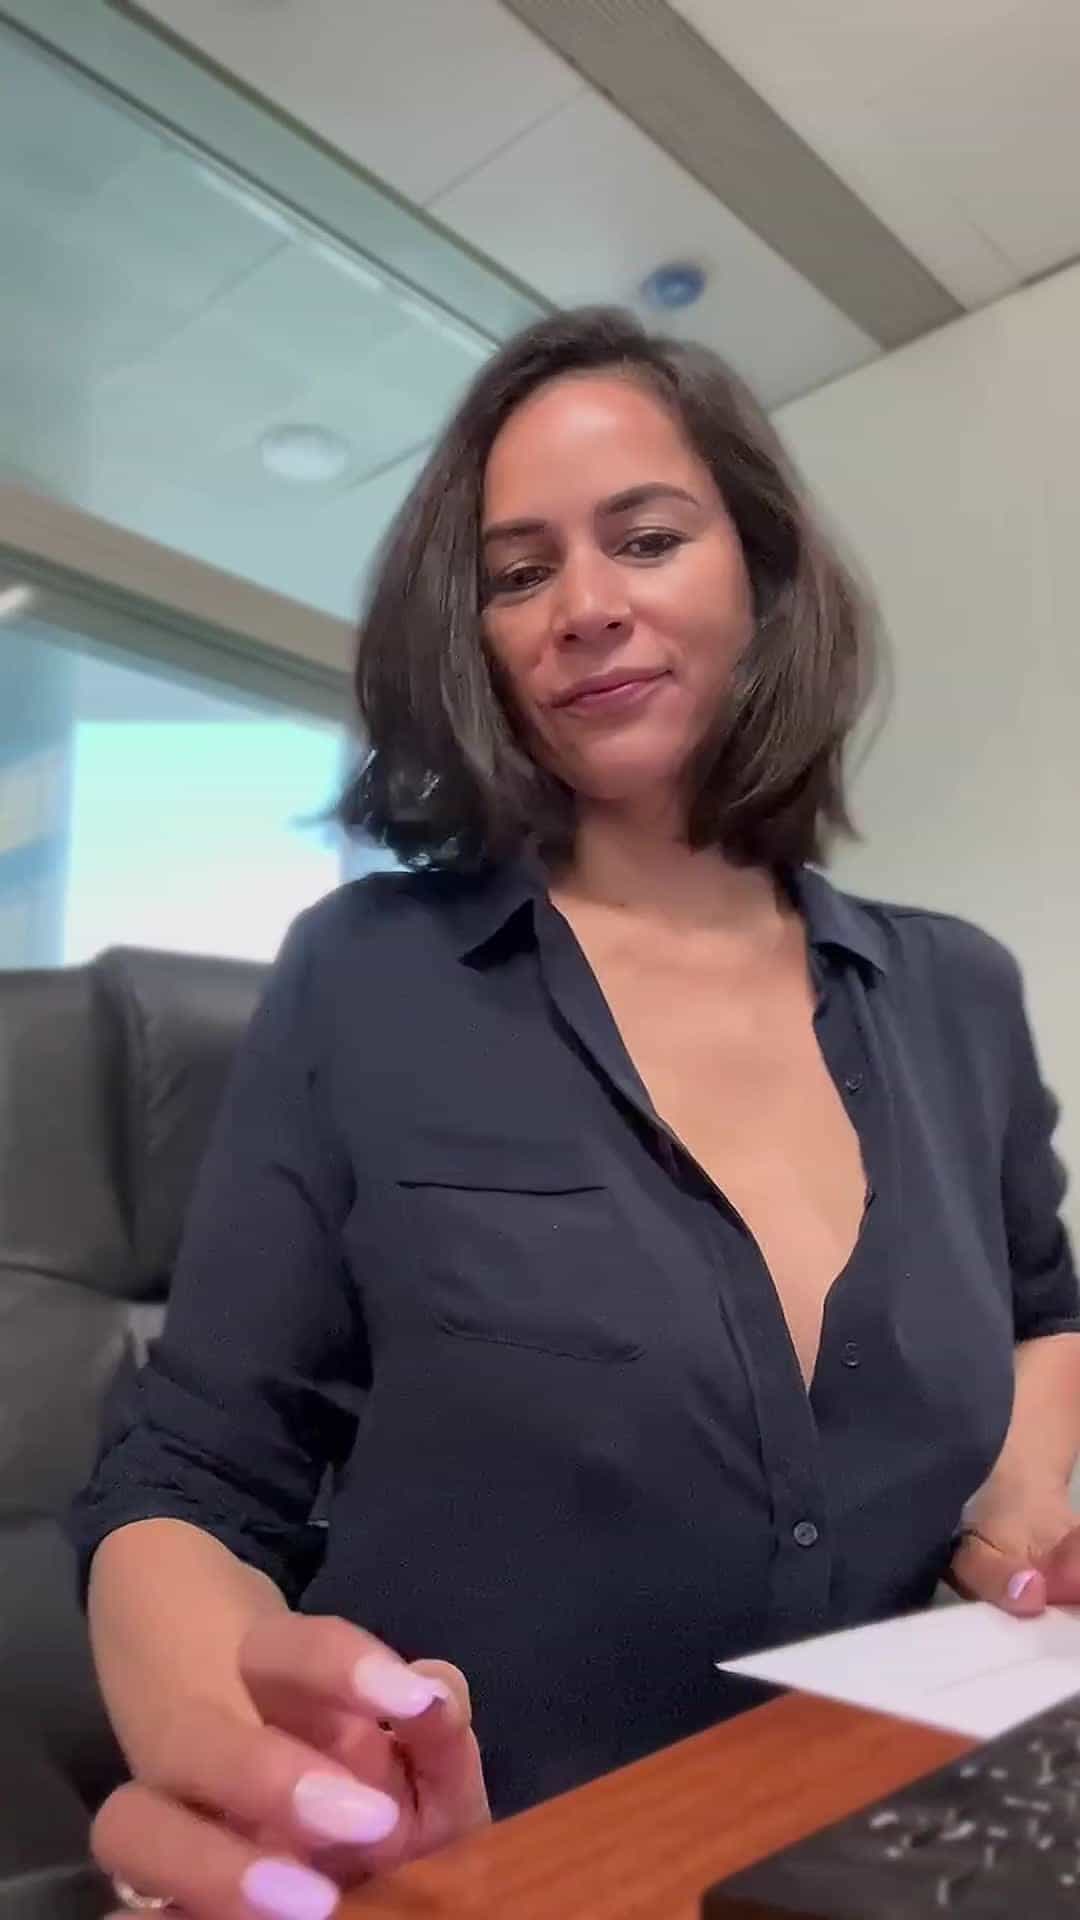 Secretary’s boobs reveal…